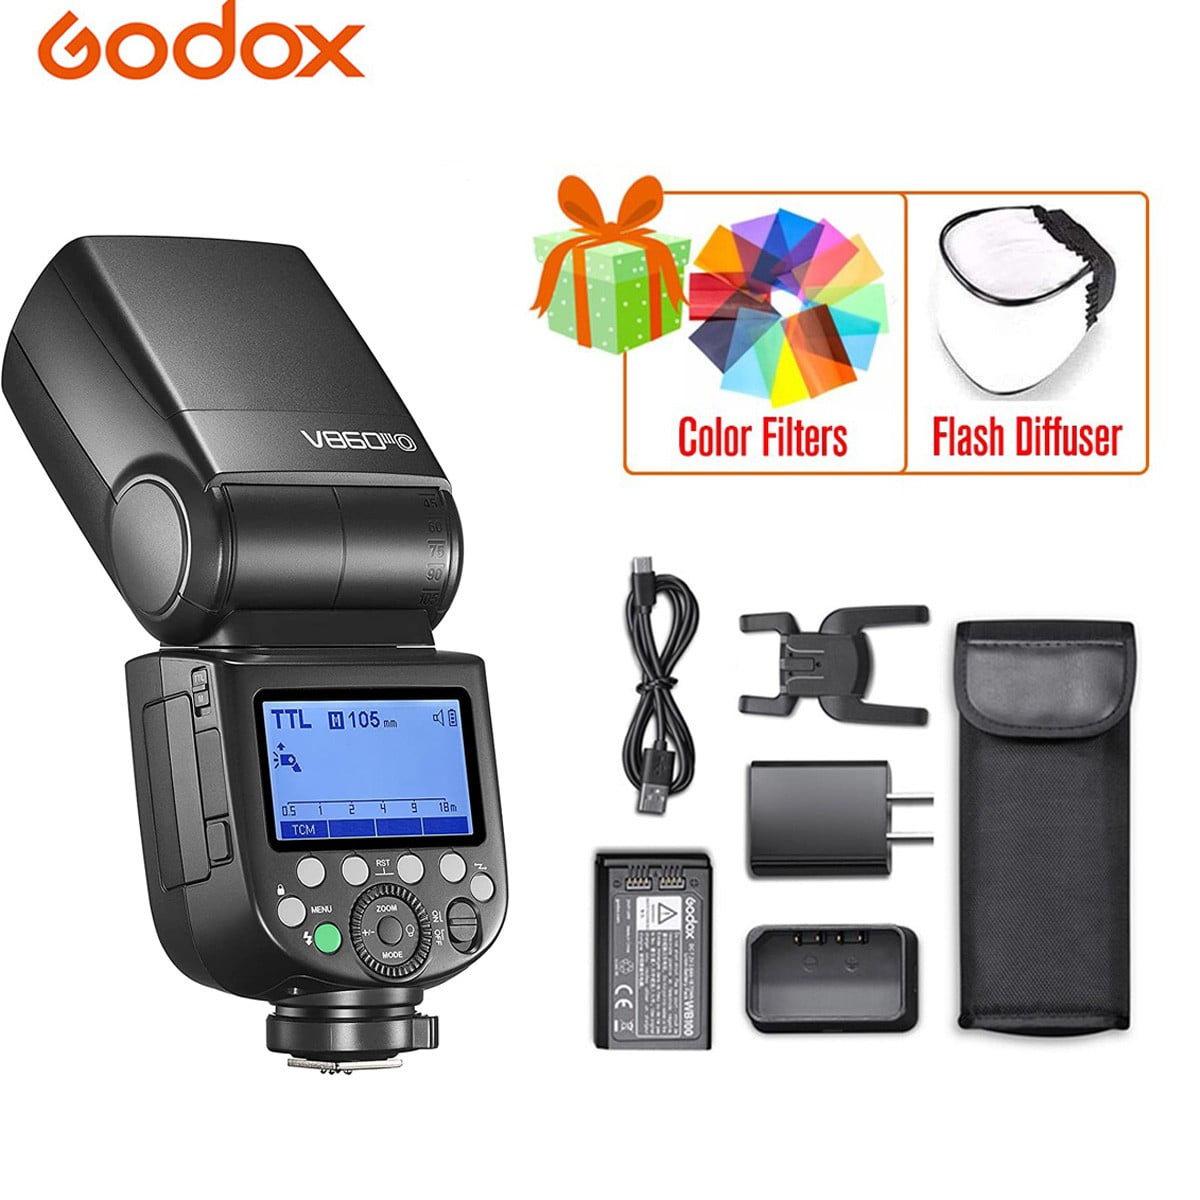 GODOX V860III-N Camera Flash for Nikon Camera Flash Speedlight Speedlite  Light,2.4G HSS 1/8000s,480 Full-Power Flashes,7.2V/2600mAh Li-ion  Battery,10